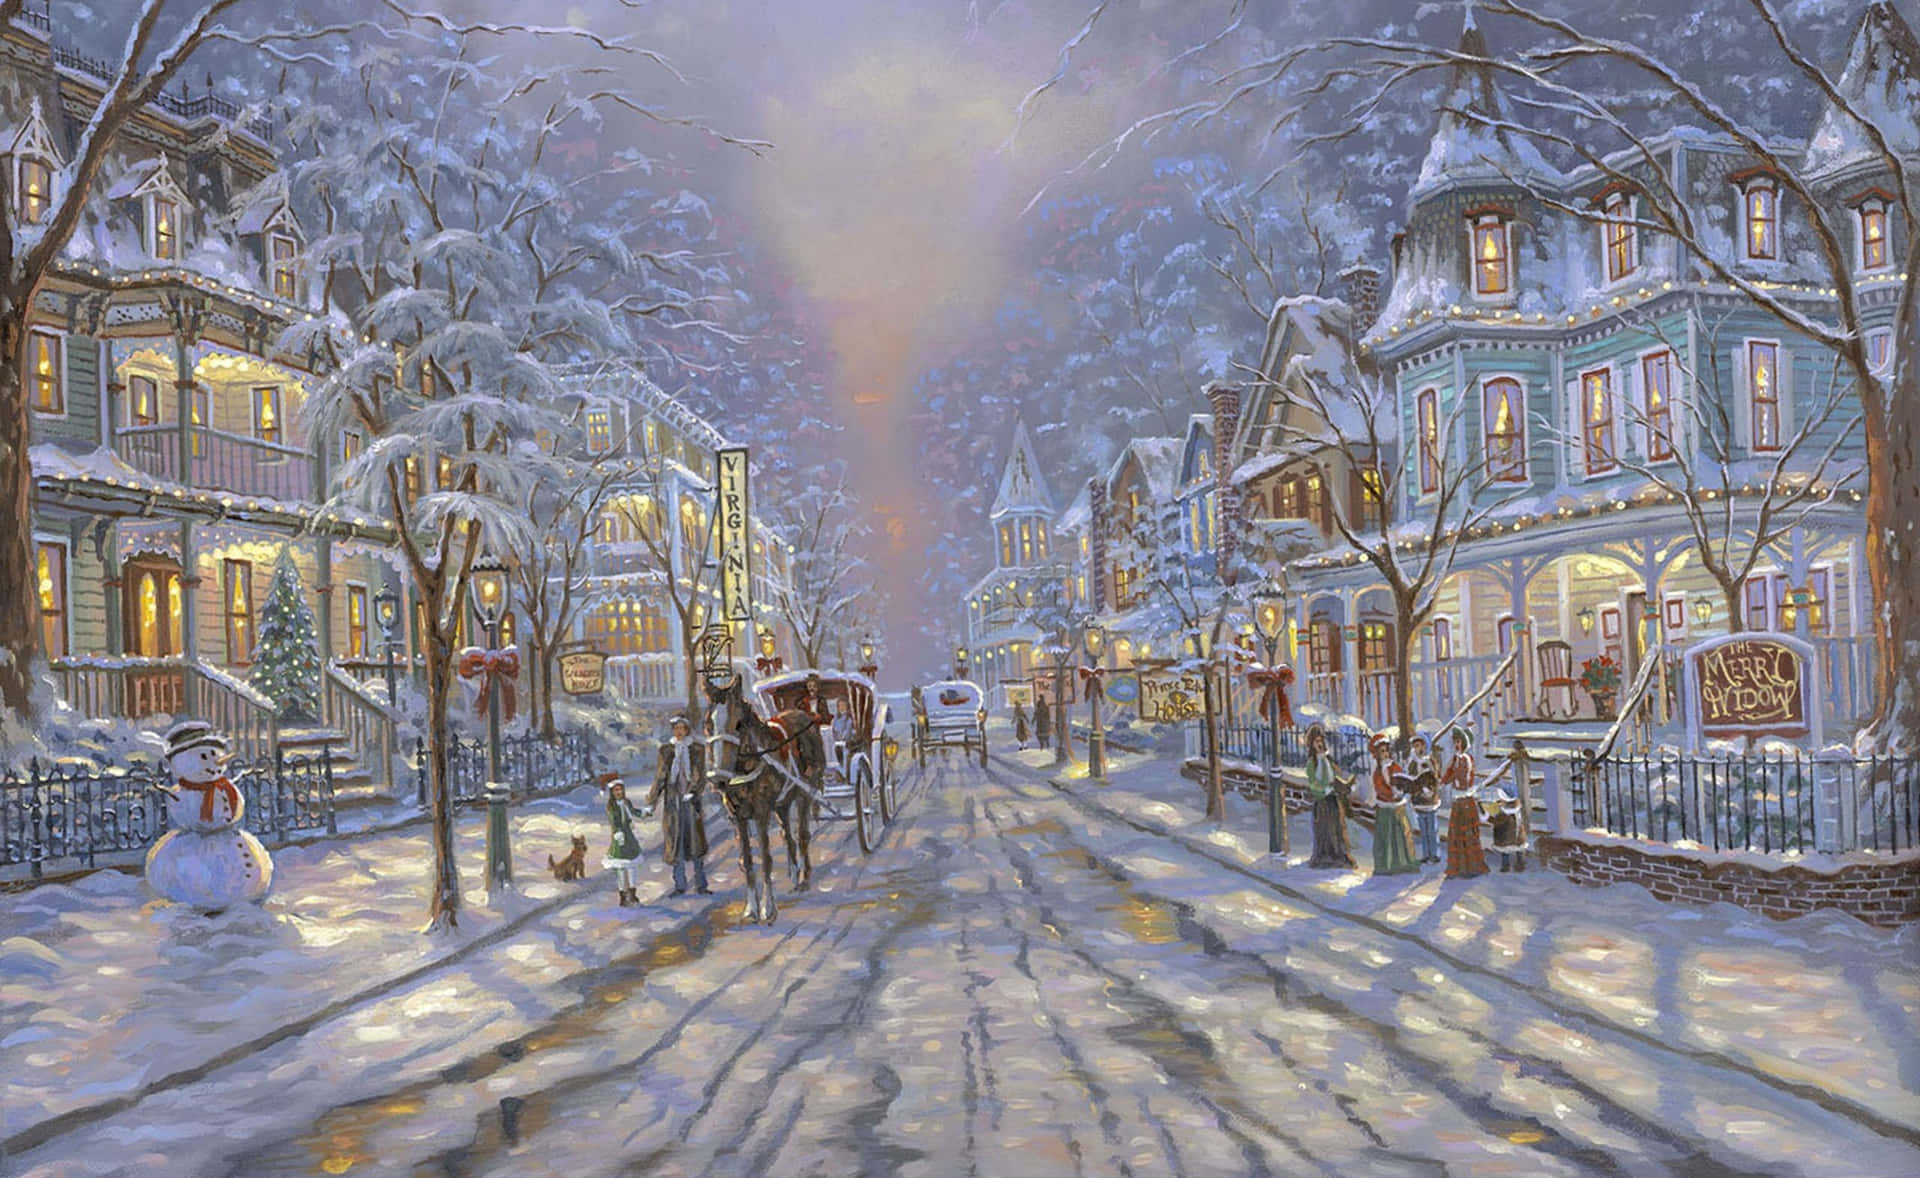 Snowy Winter Landscape Painting Wallpaper